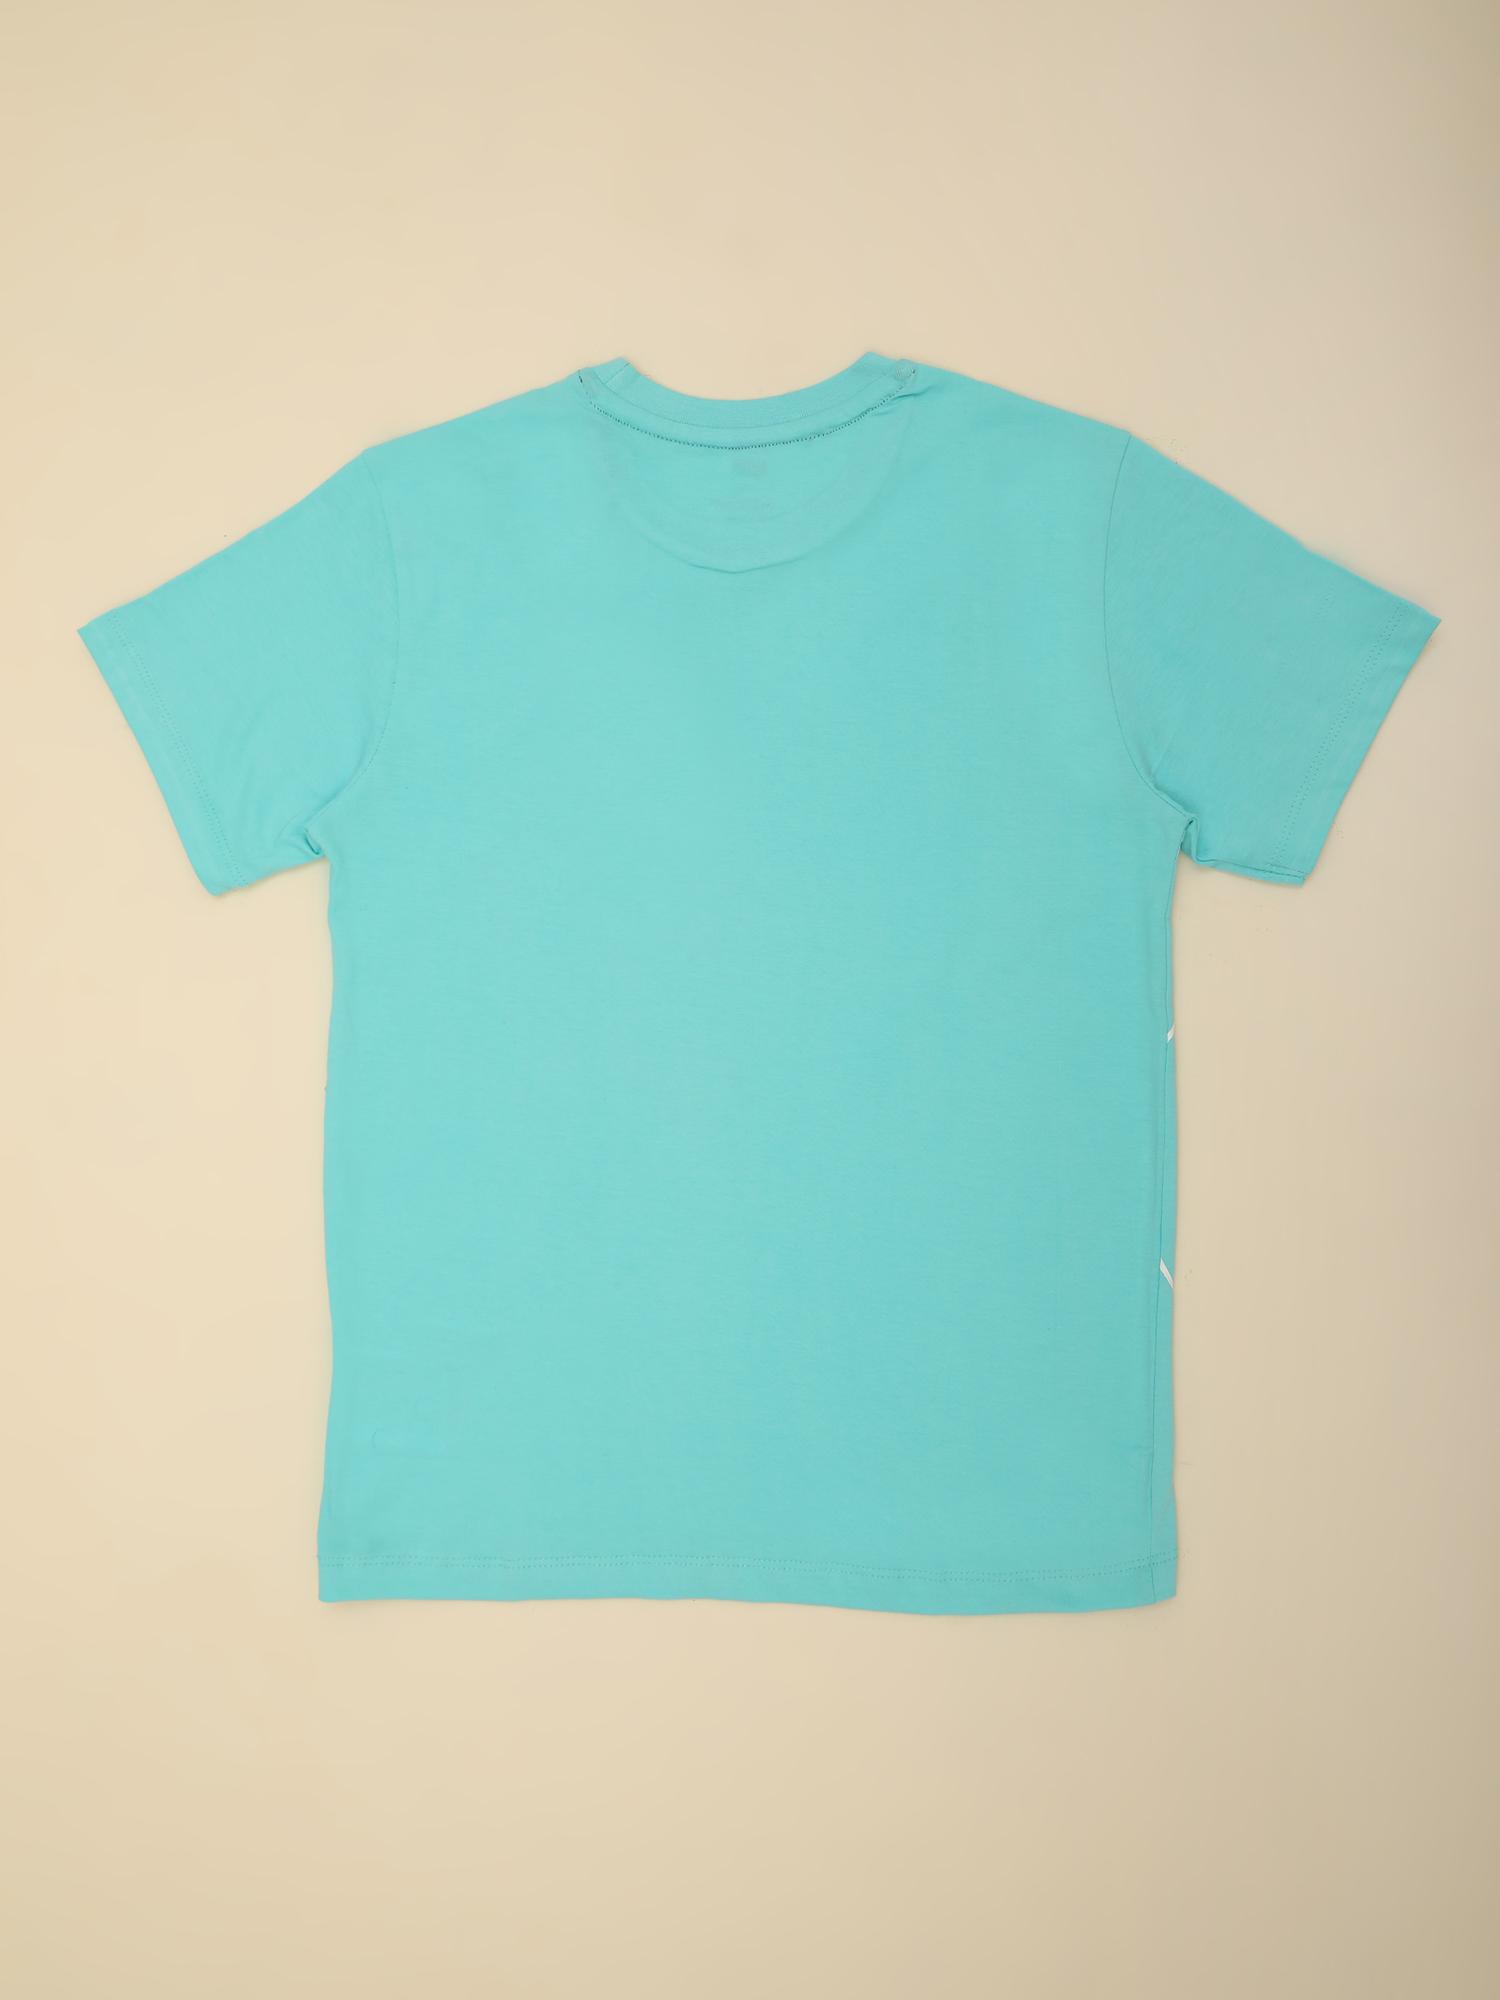 BYOStyle Boys Cotton Tshirt Printed-Turquoise Blue